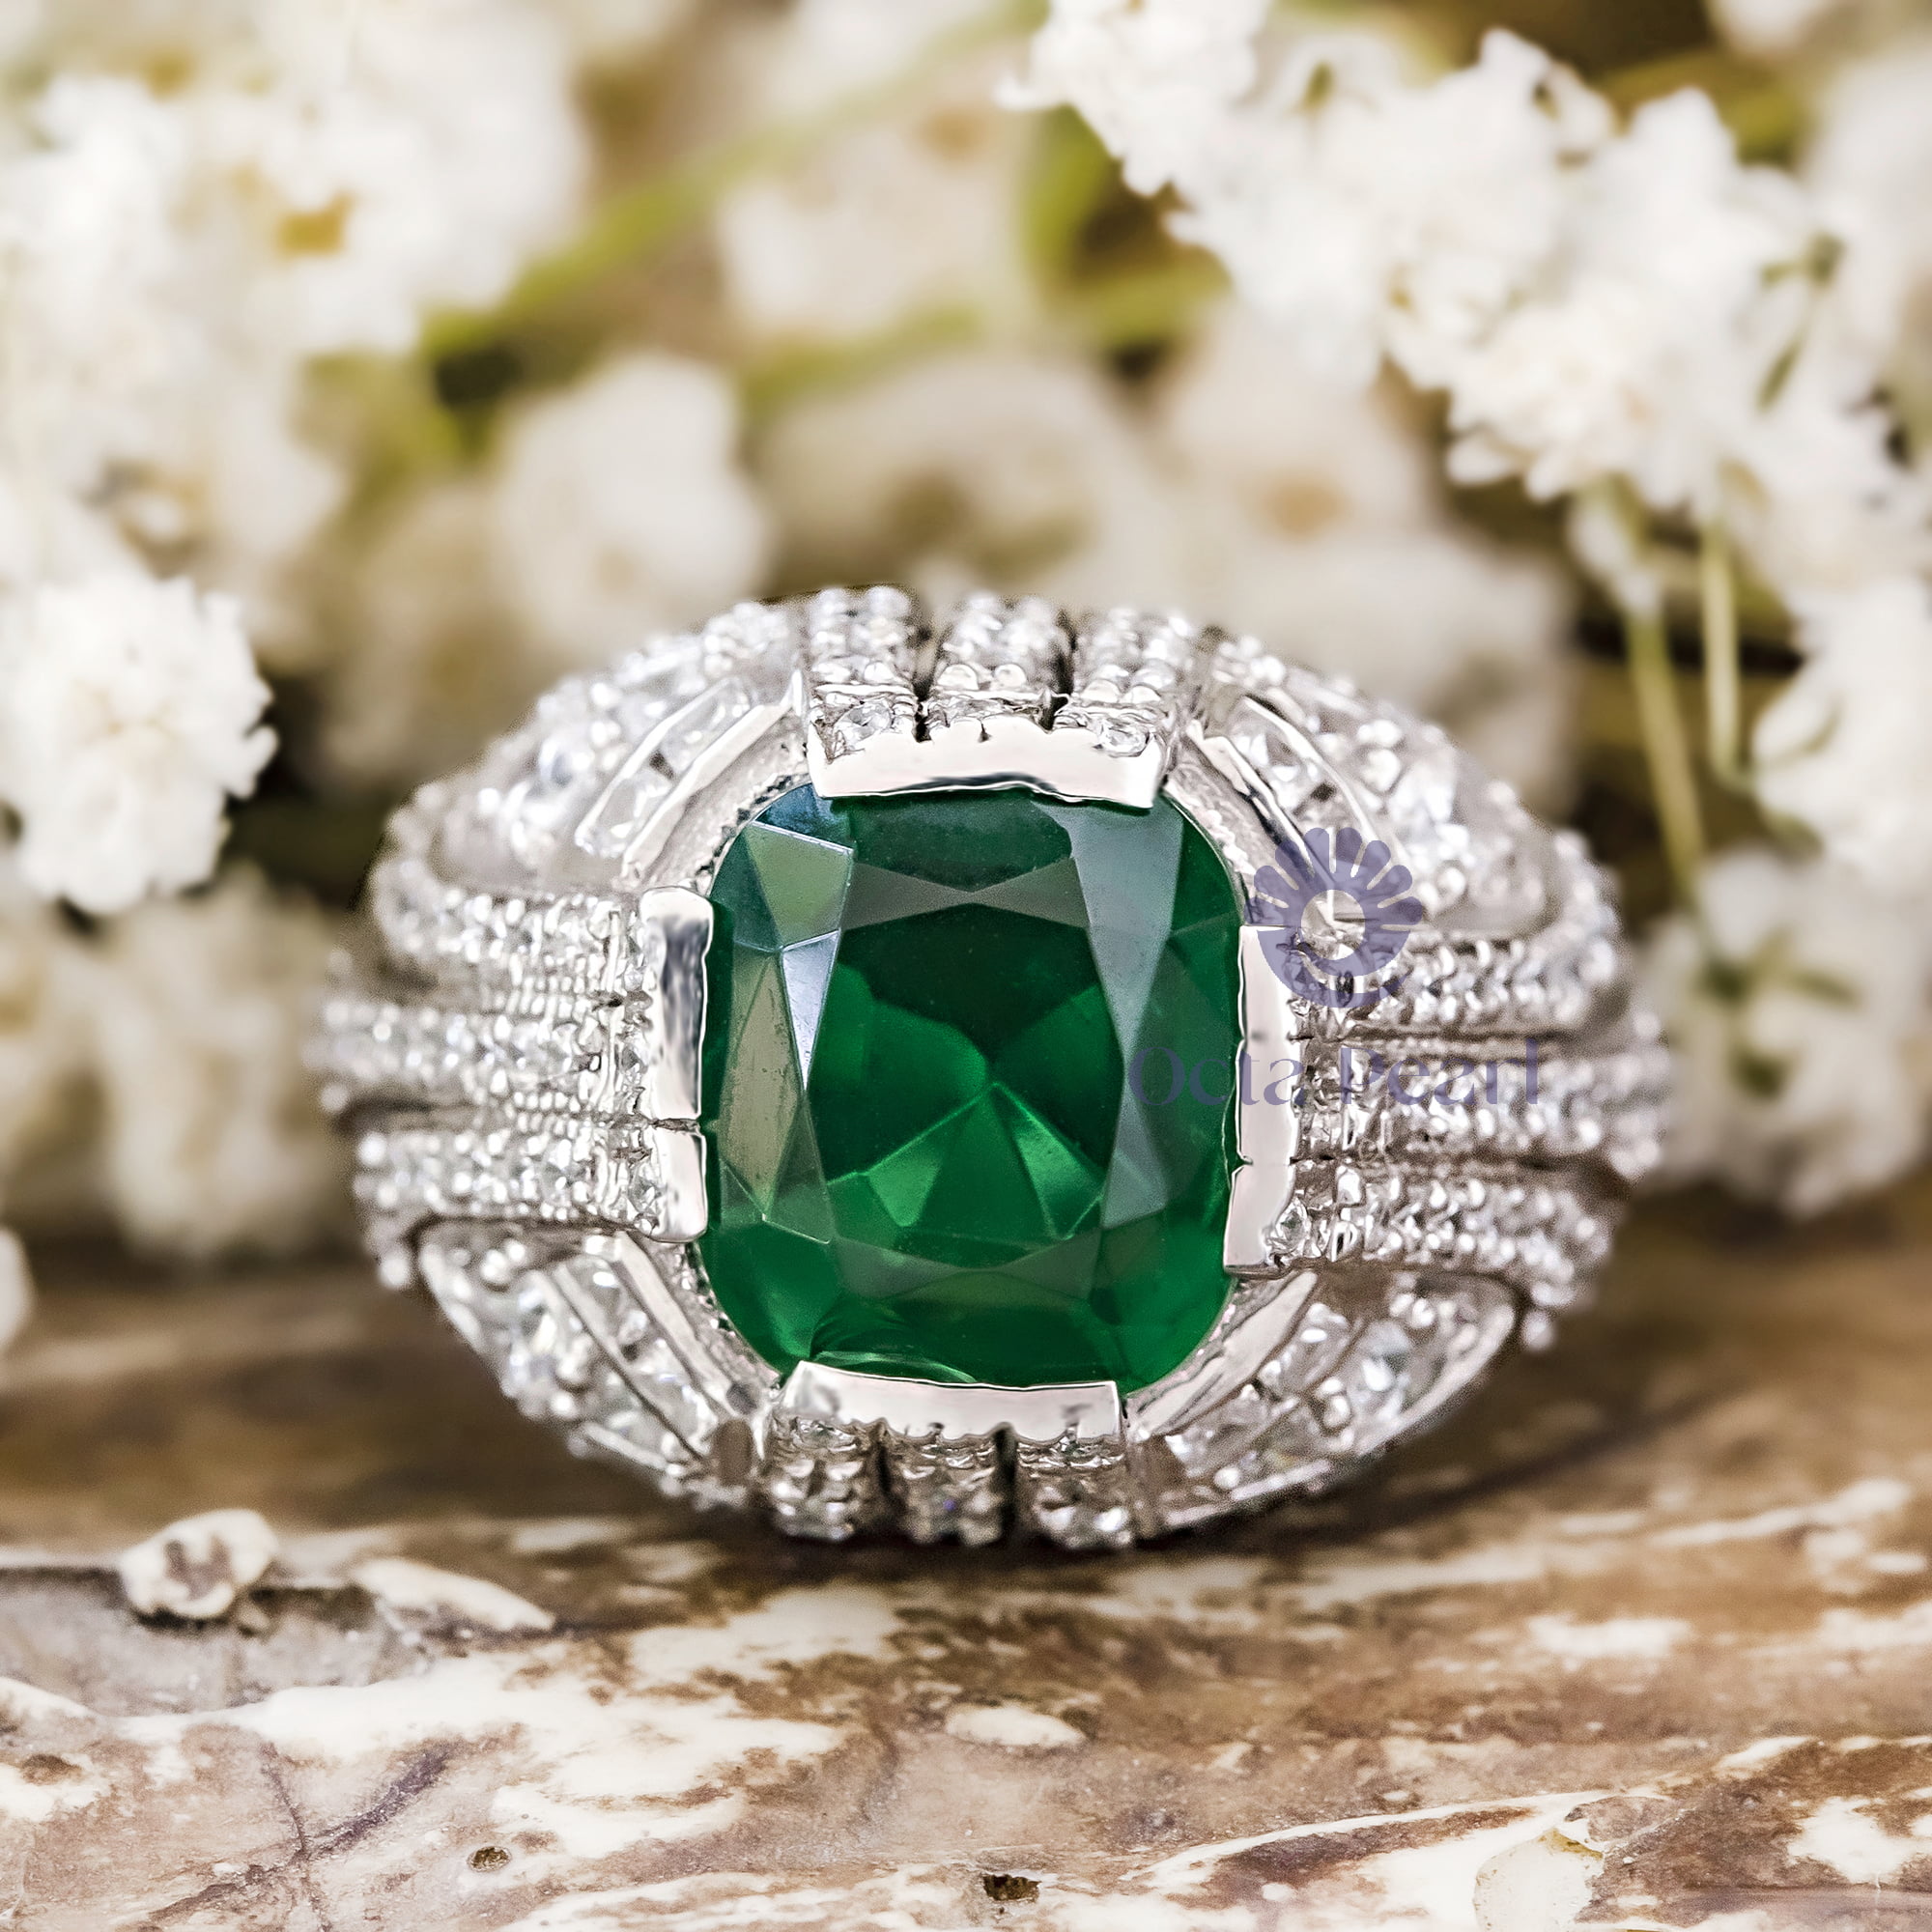 10x9 MM Green Cushion Cut CZ Stone Milgrain Antique Victorian Art Deco Ring For Engagement